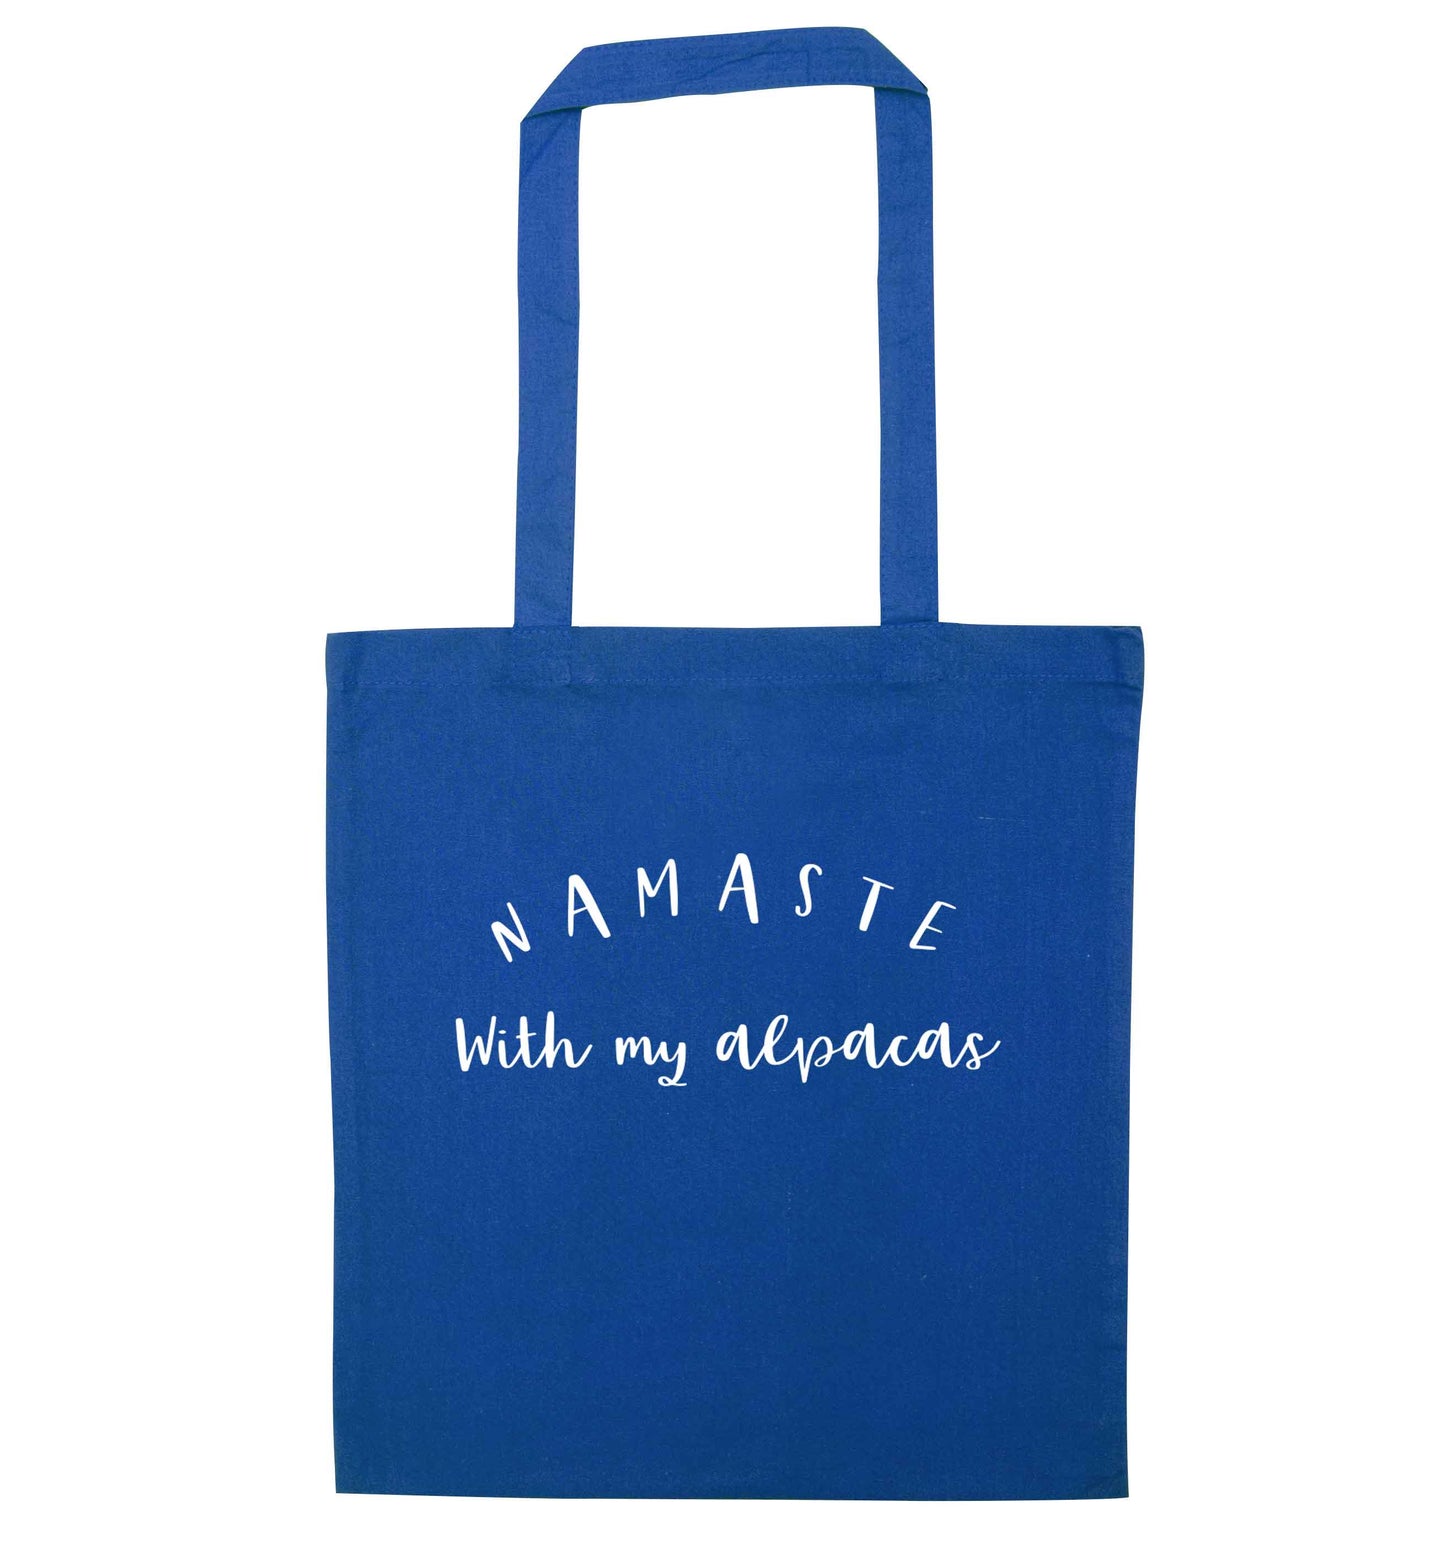 Namaste with my alpacas blue tote bag